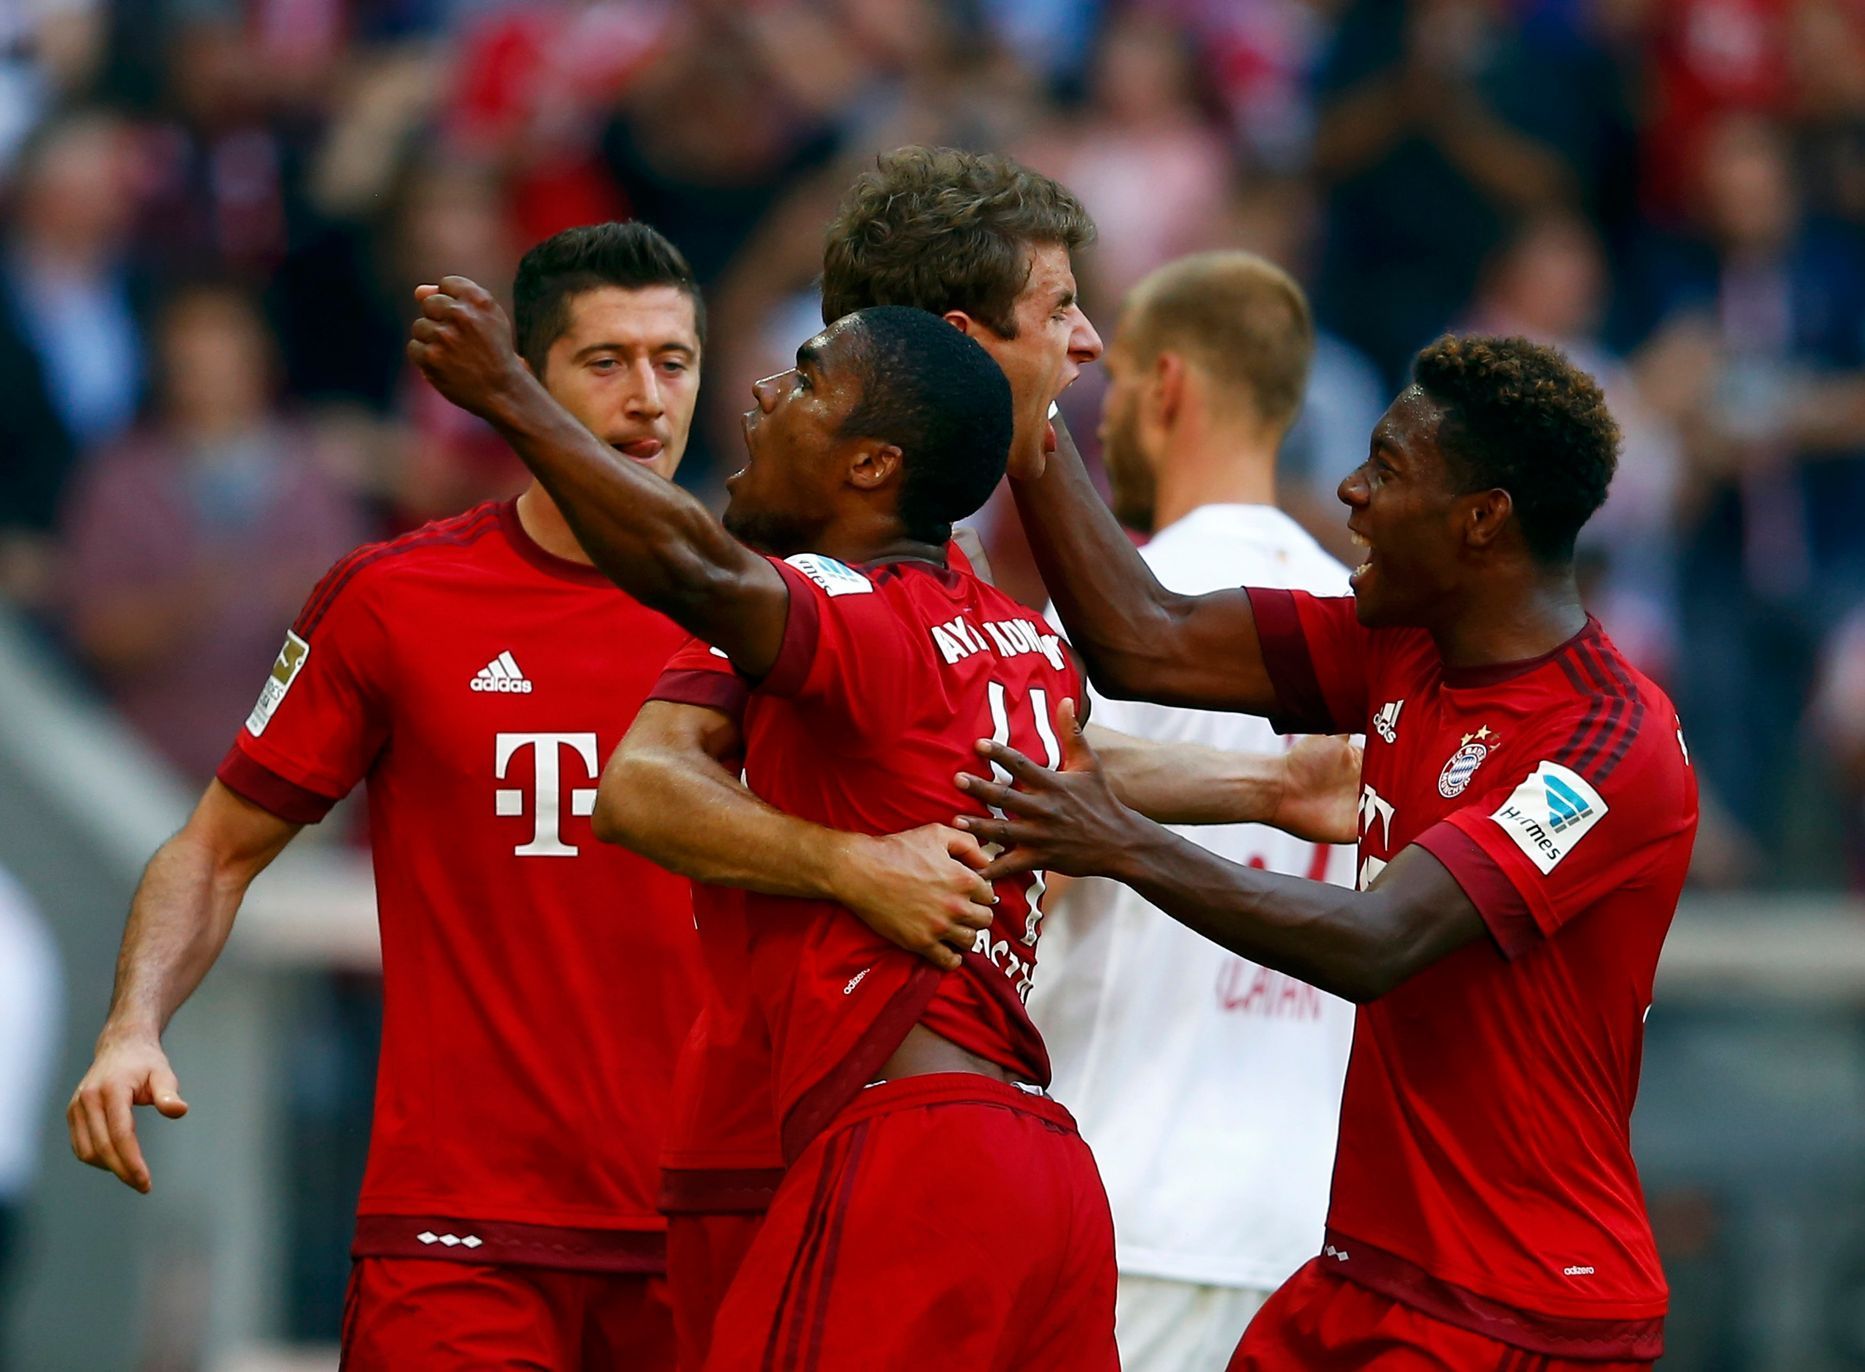 Bayern Mnichov - Augsburg: radost Bayernu